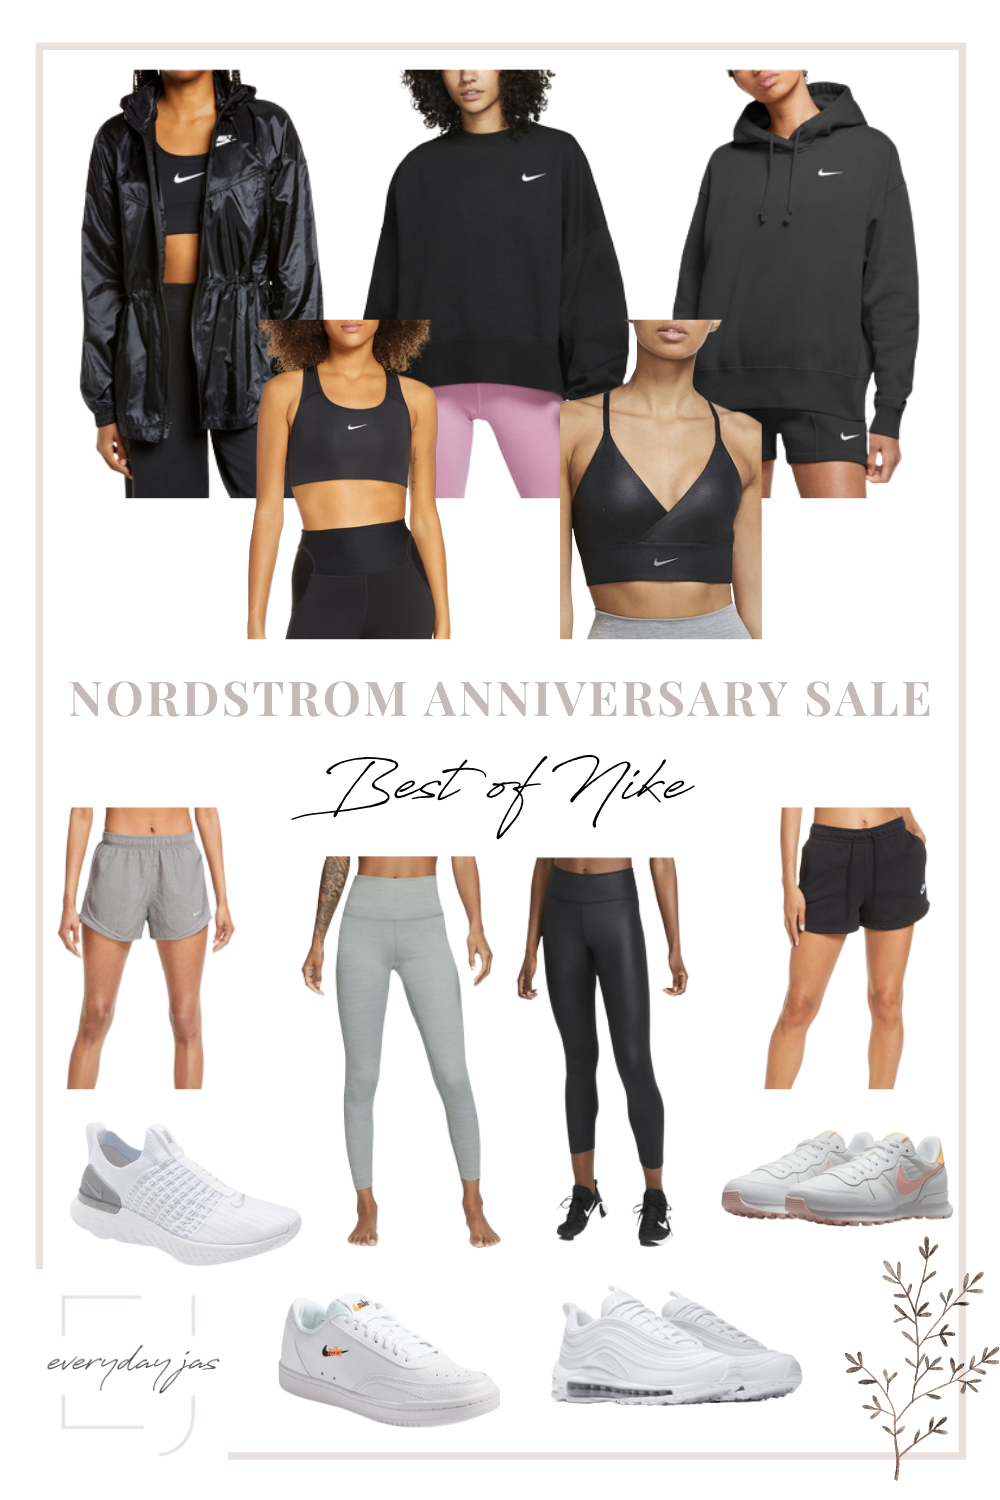 Women's Nordstrom Anniversary Sale best of nike